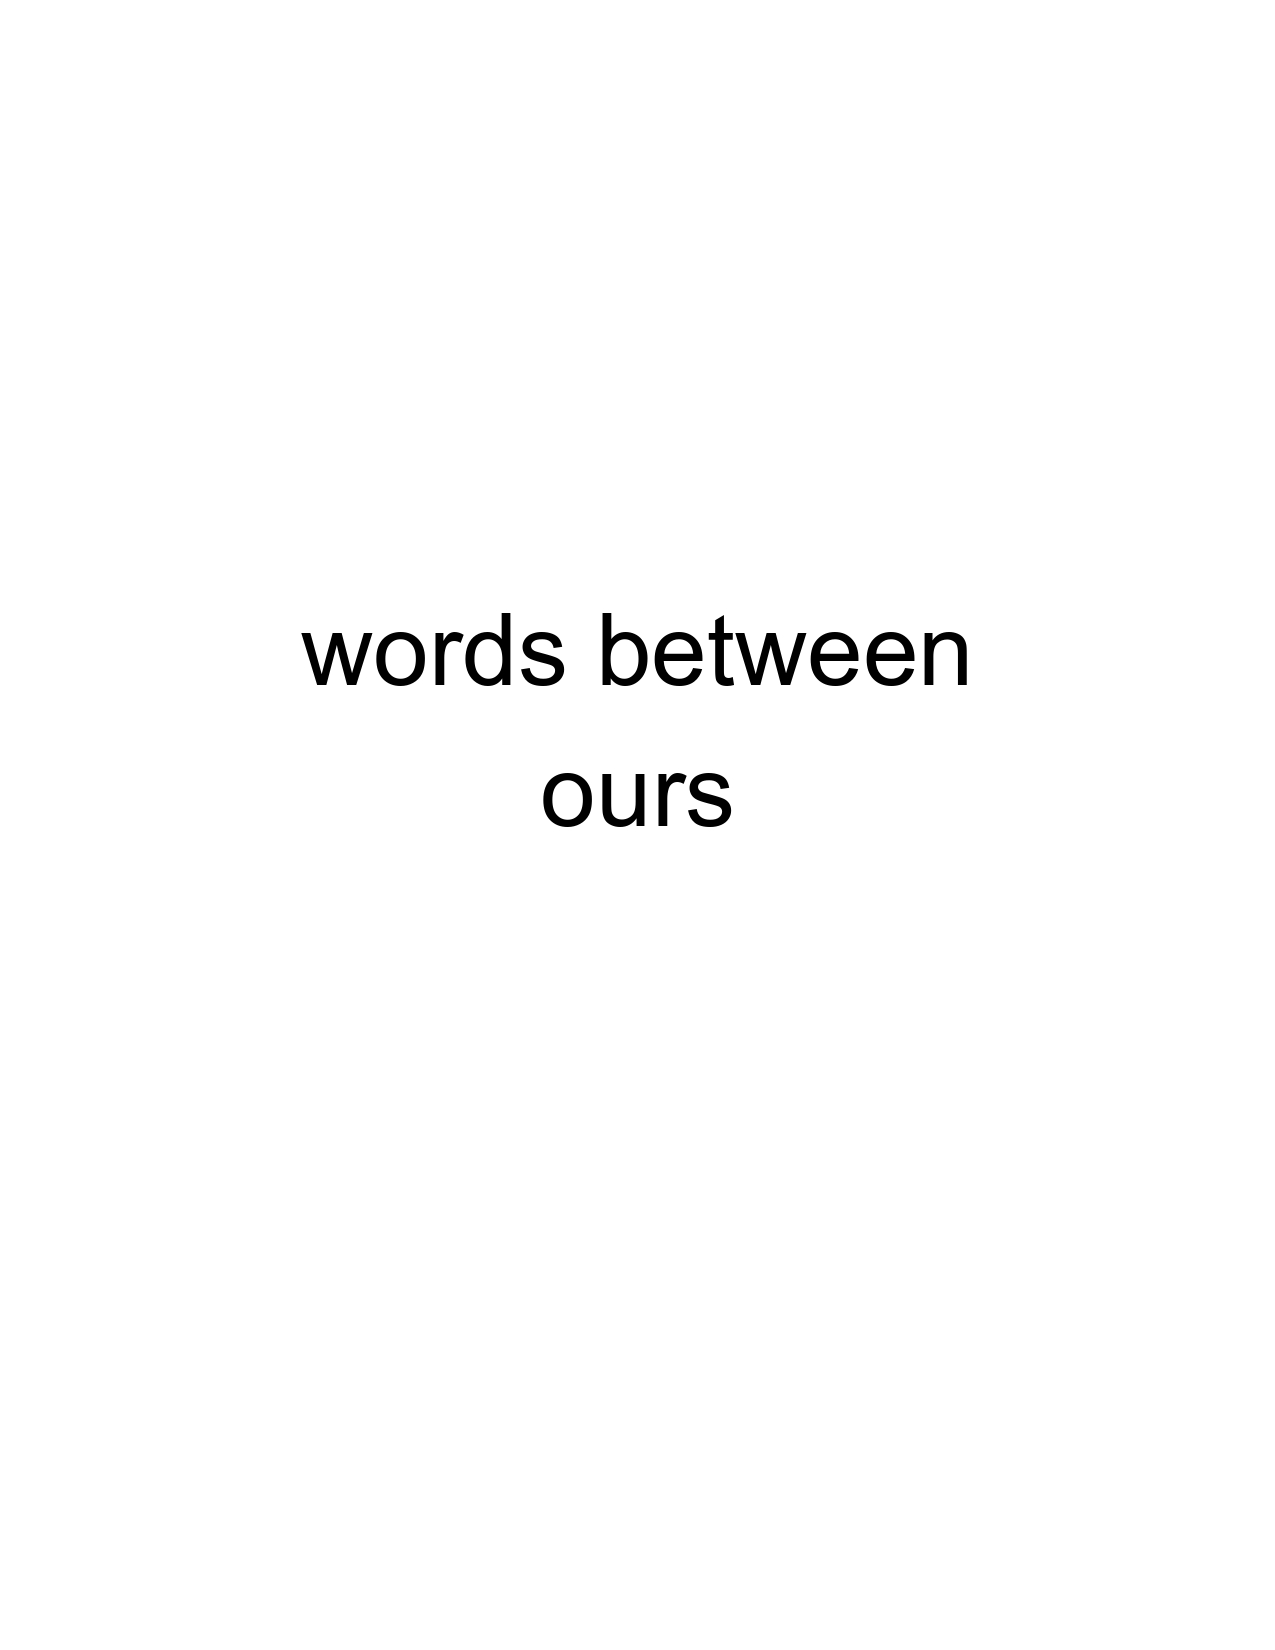 Words Between Ours